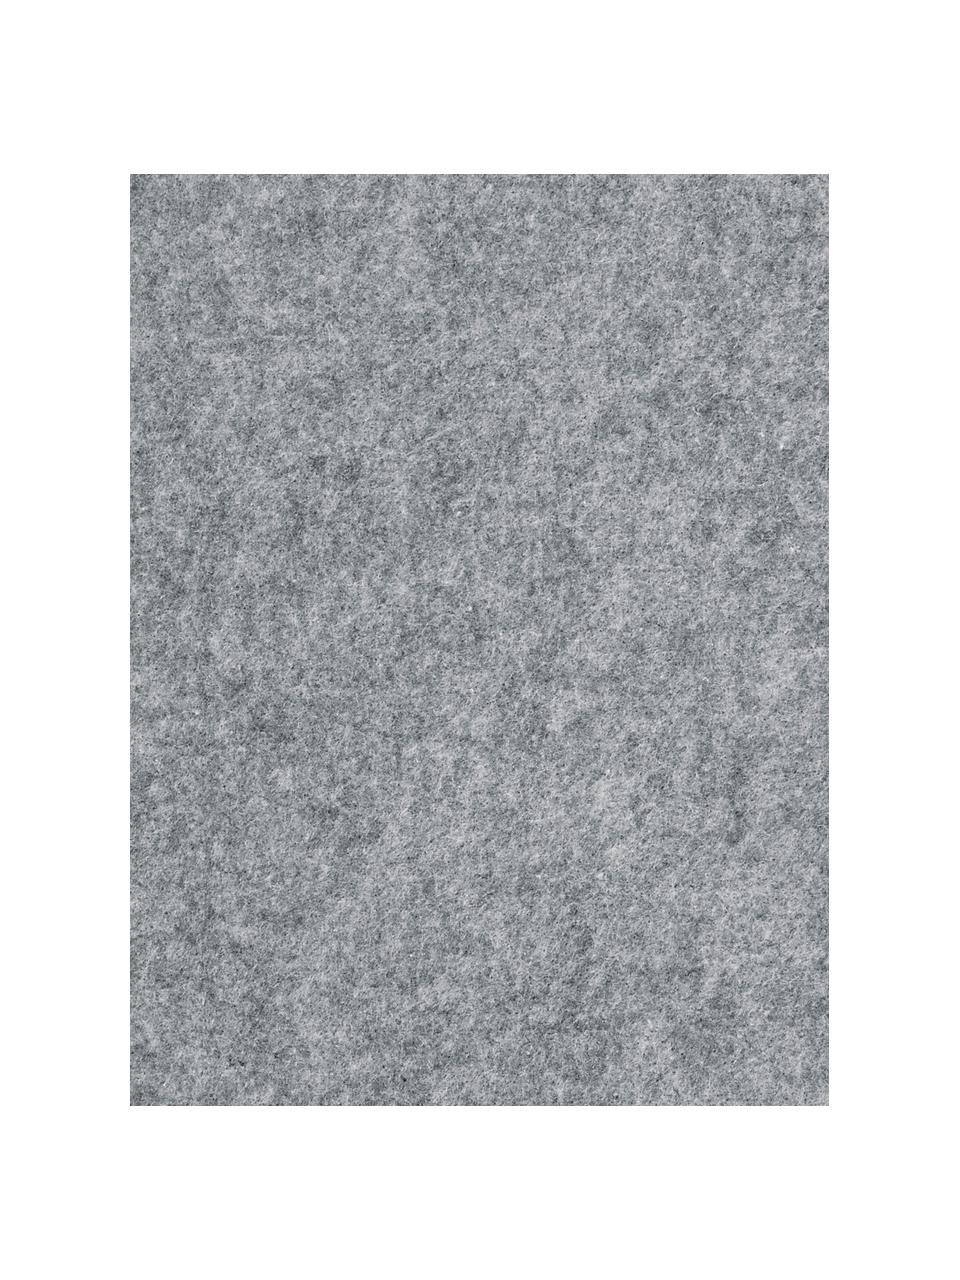 Filz-Sitzauflagen Avaro Square, 4 Stück, Grau, B 35 x L 35 cm